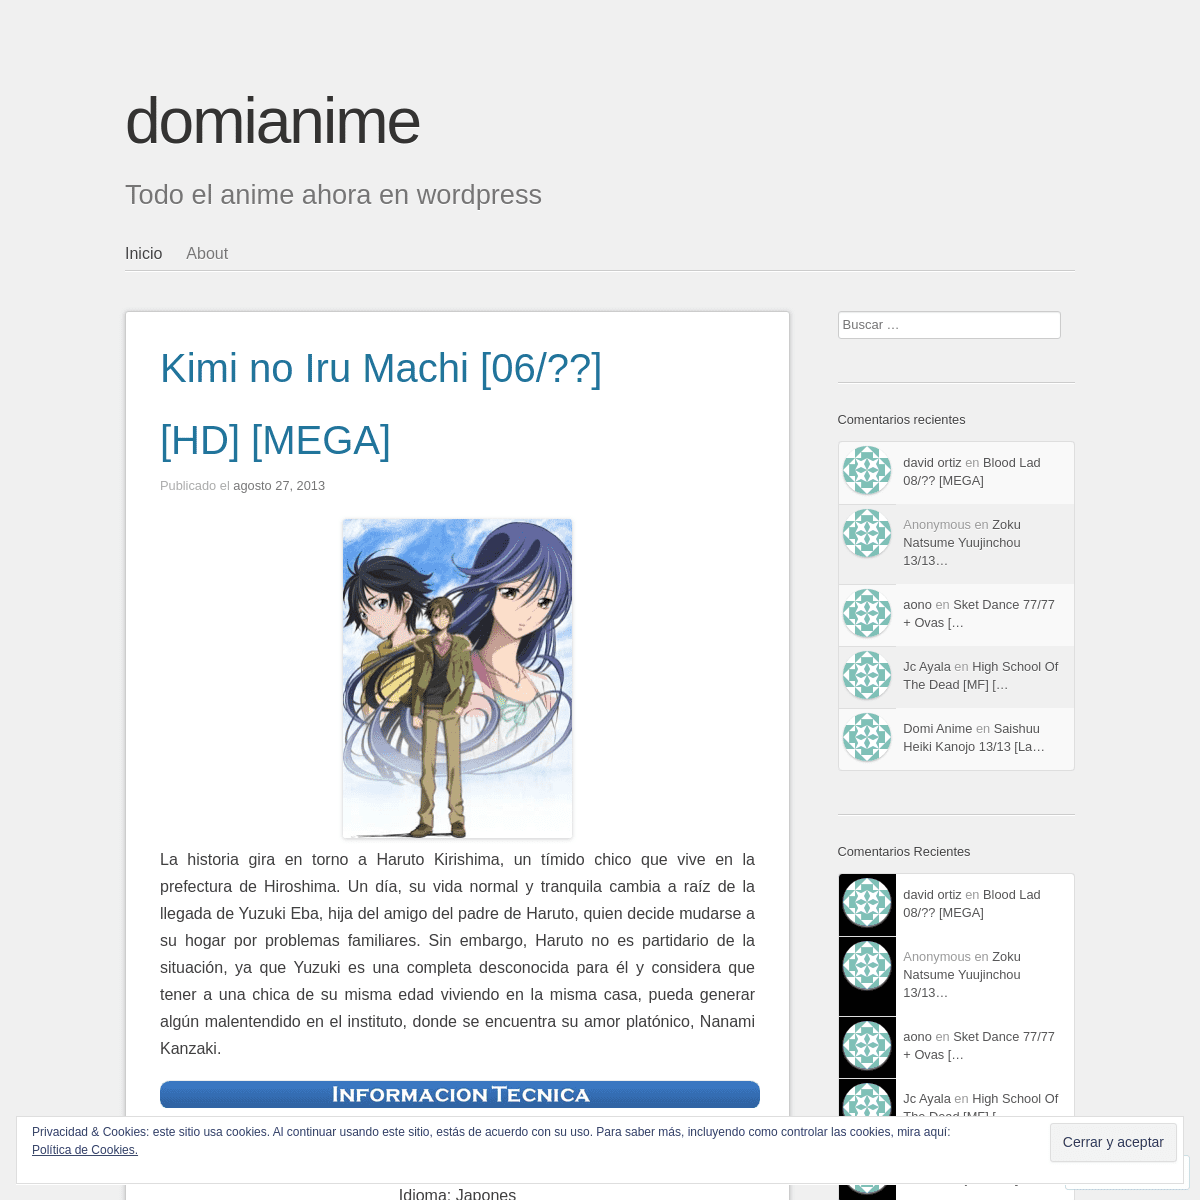 A complete backup of domianime.wordpress.com